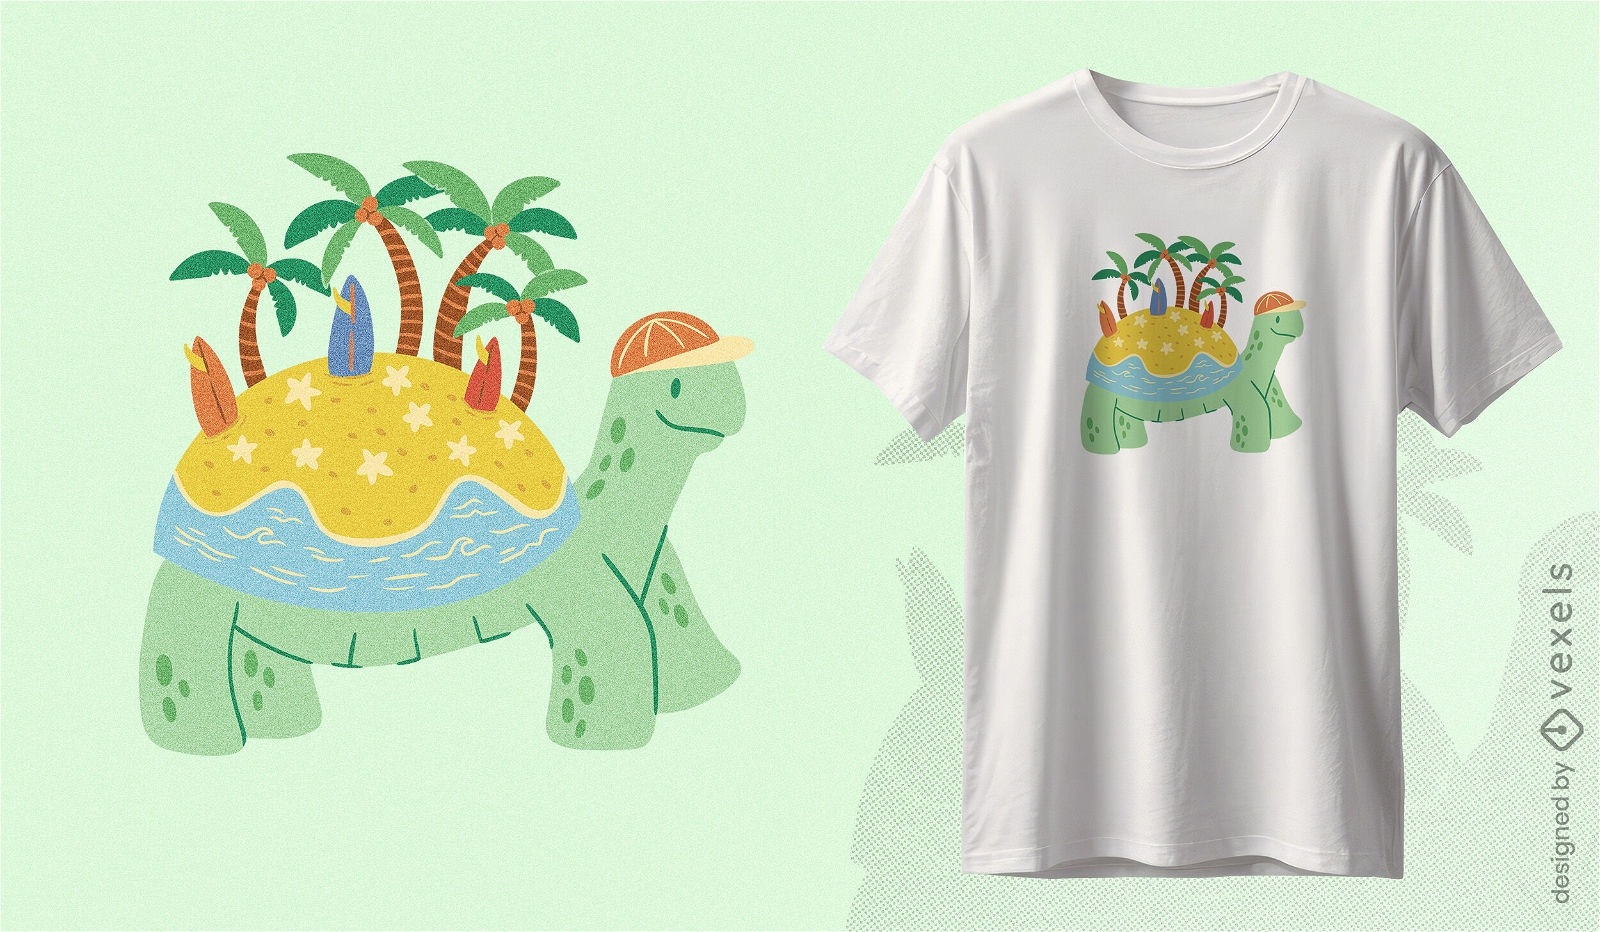 Dise?o de camiseta de isla tortuga tropical.